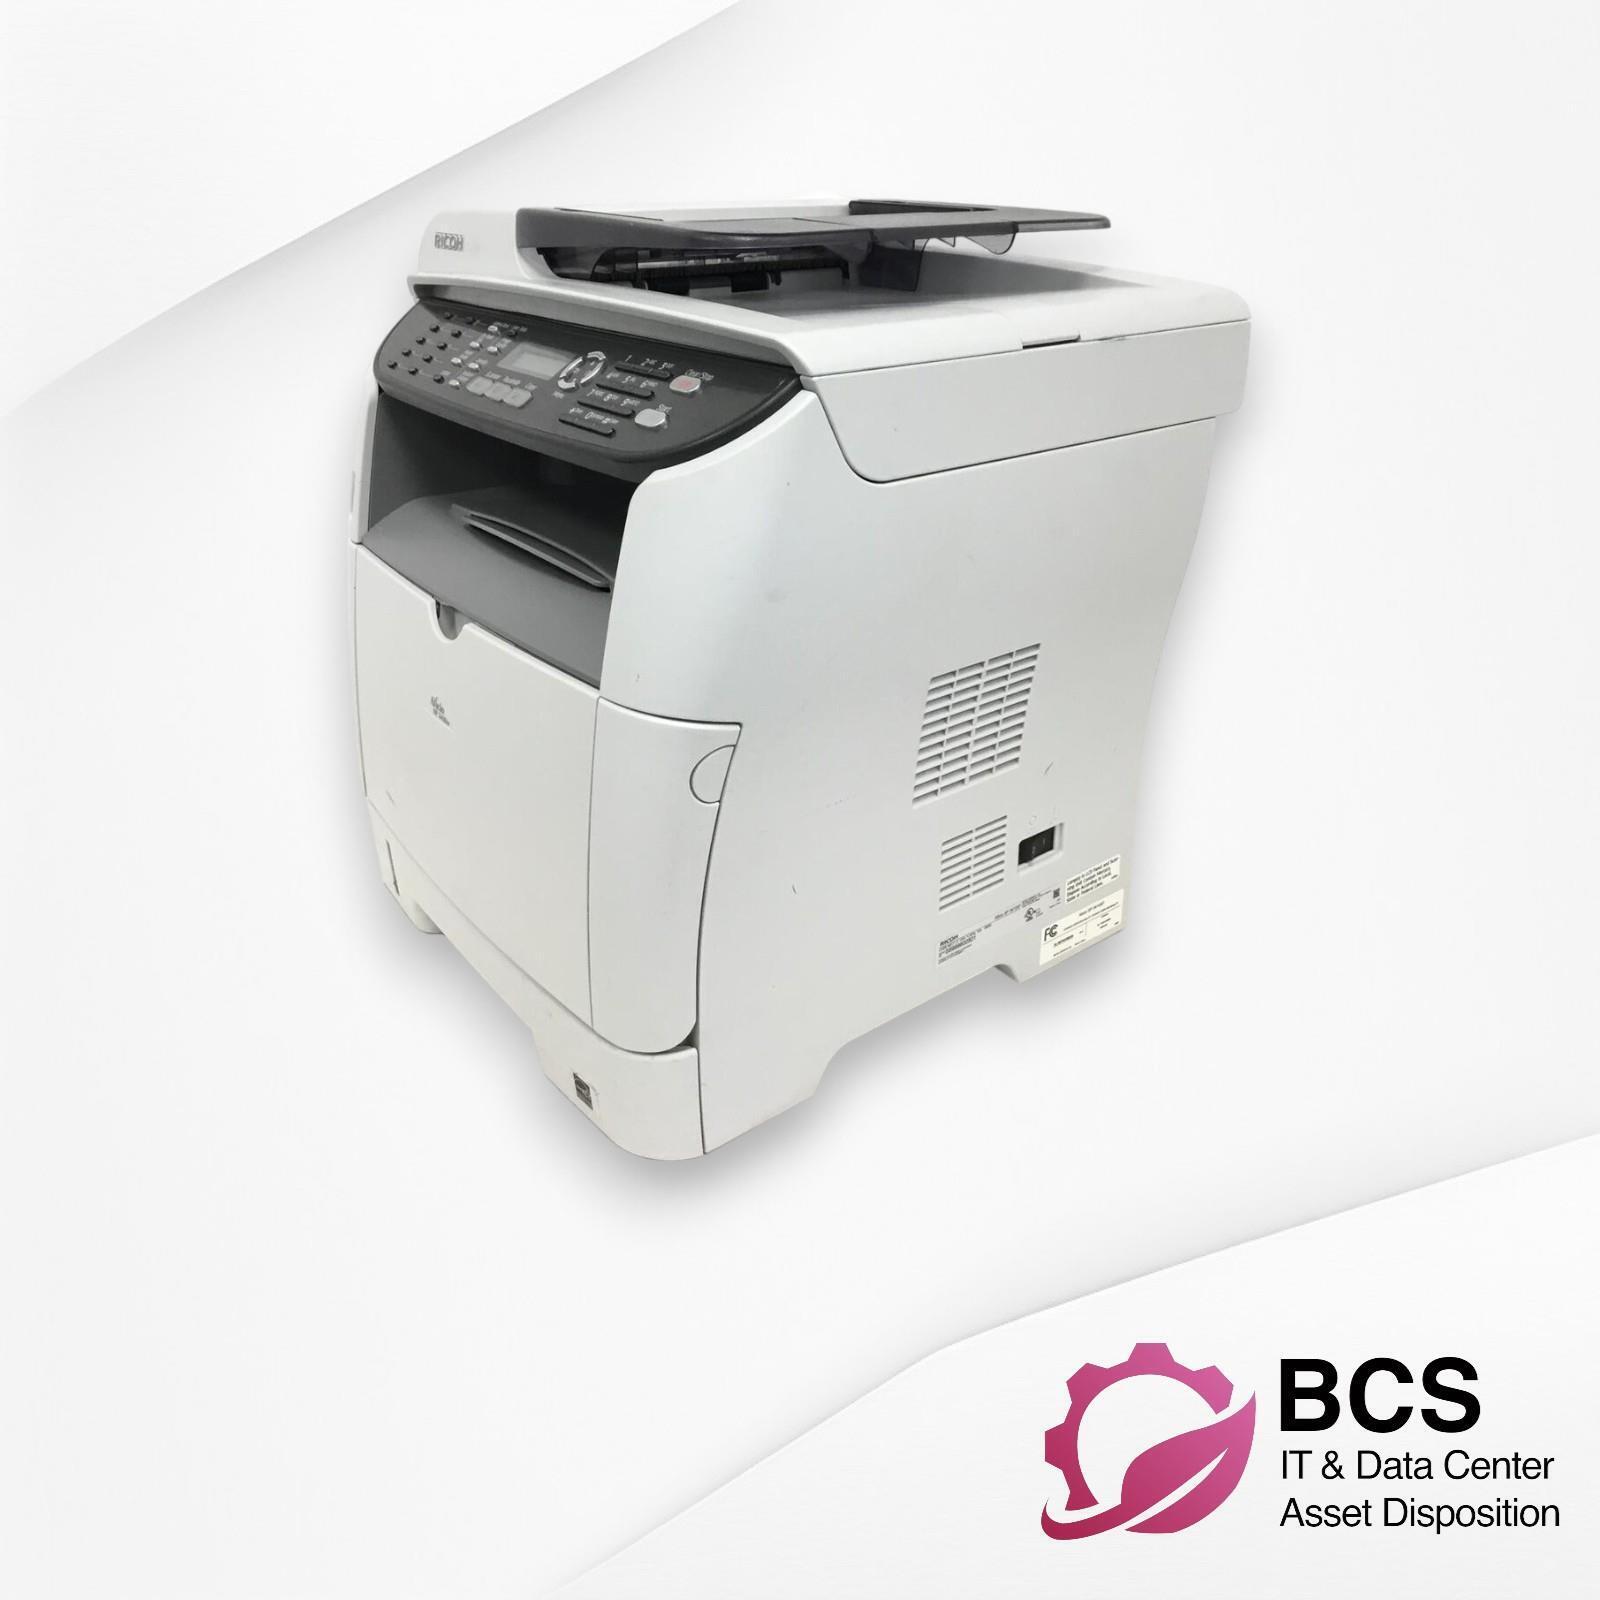 *Ricoh Aficio SP SP3400SF Network Color All-in-One Laser Printer